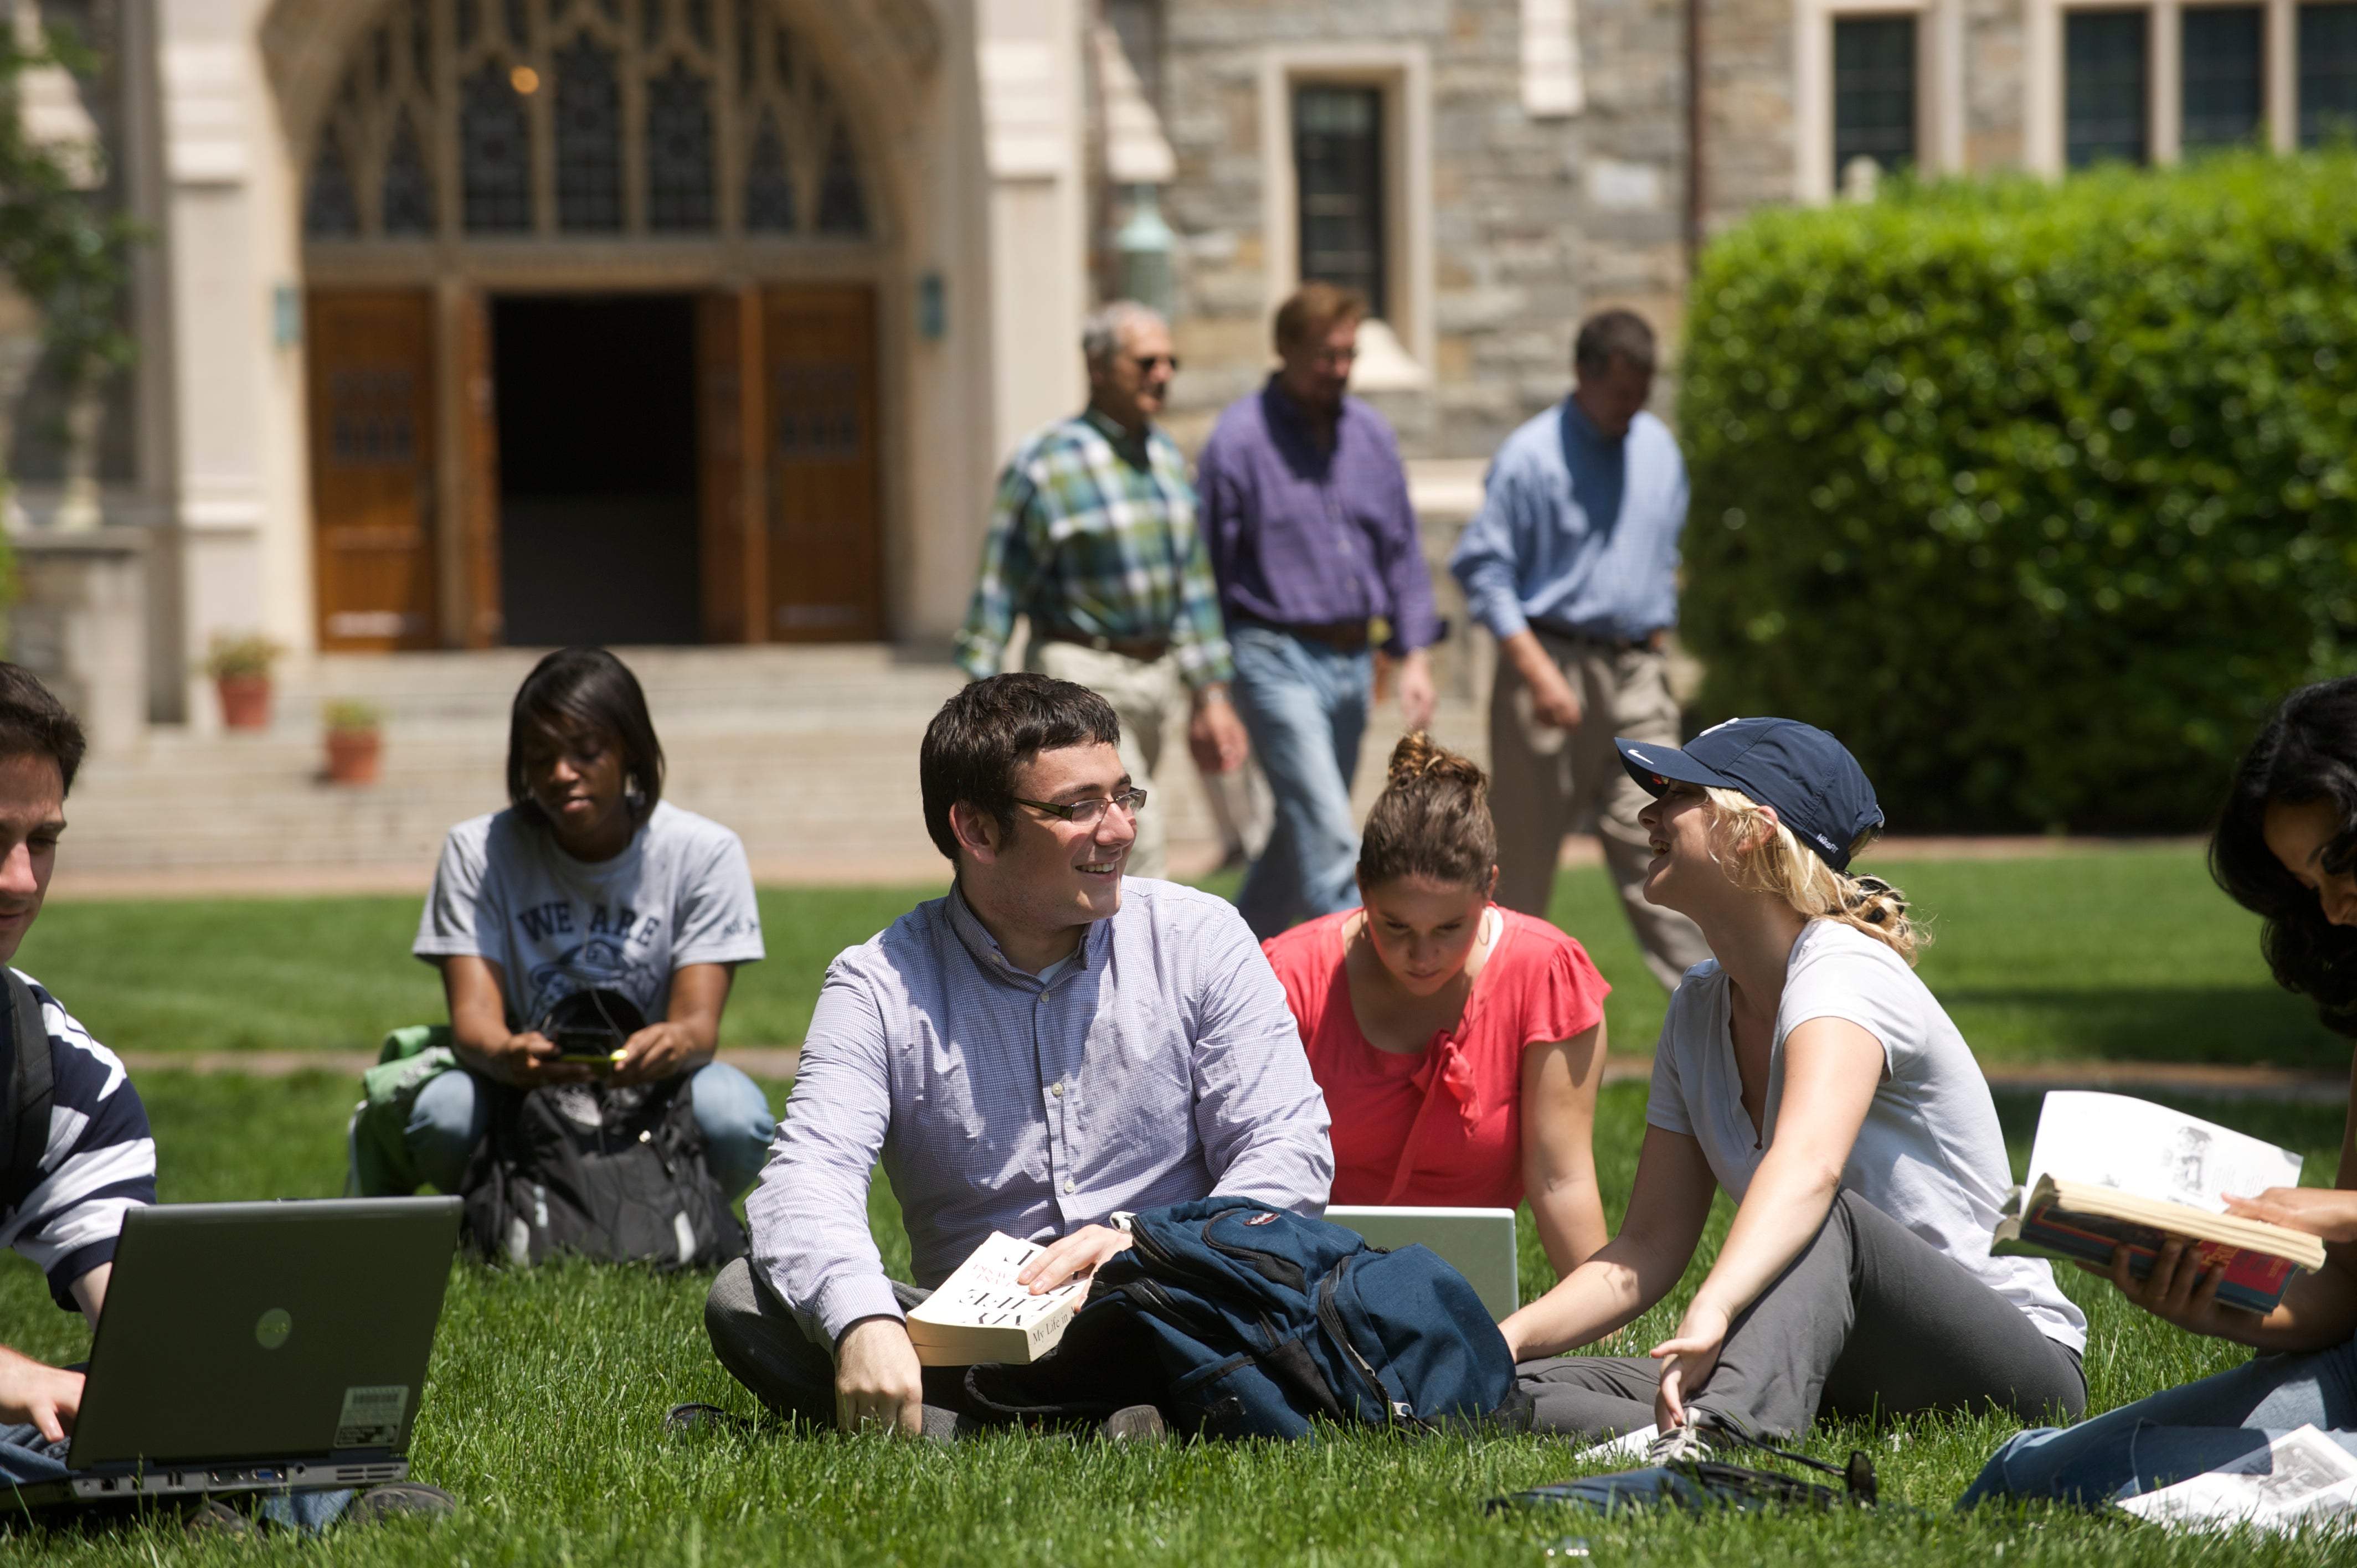 Undergrad students on lawn